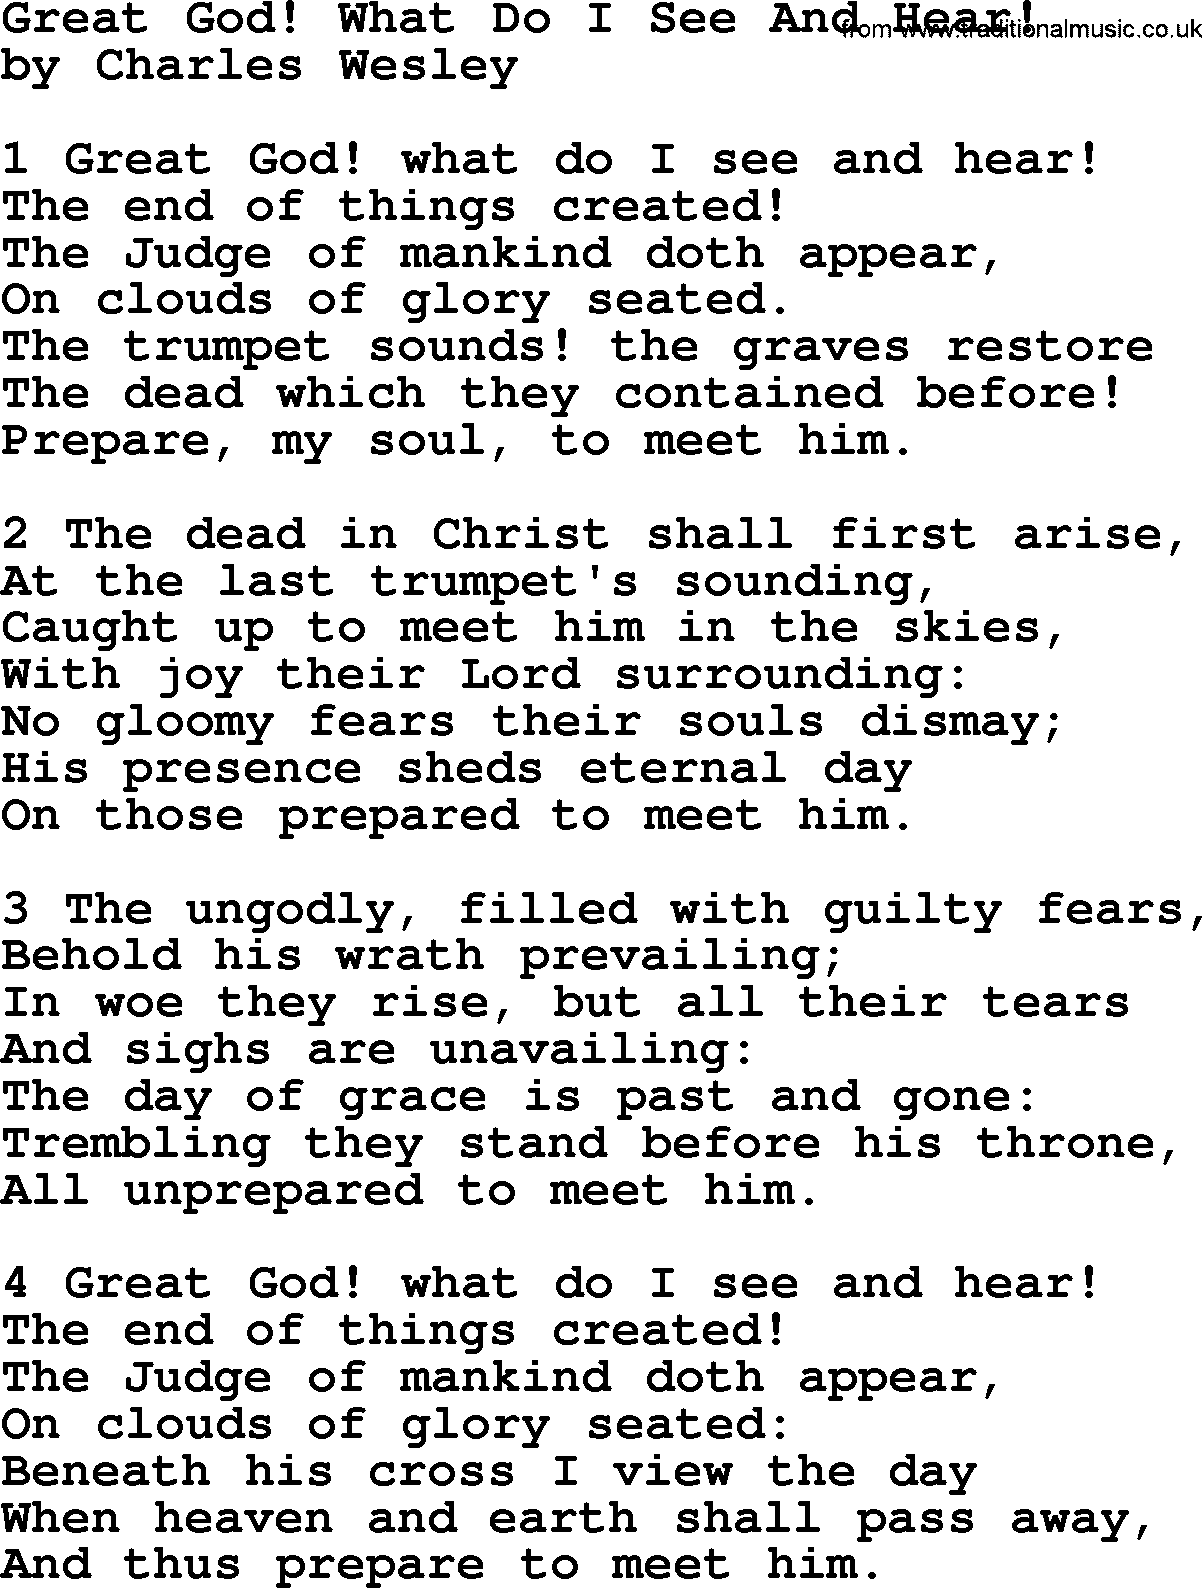 Charles Wesley hymn: Great God! What Do I See And Hear!, lyrics